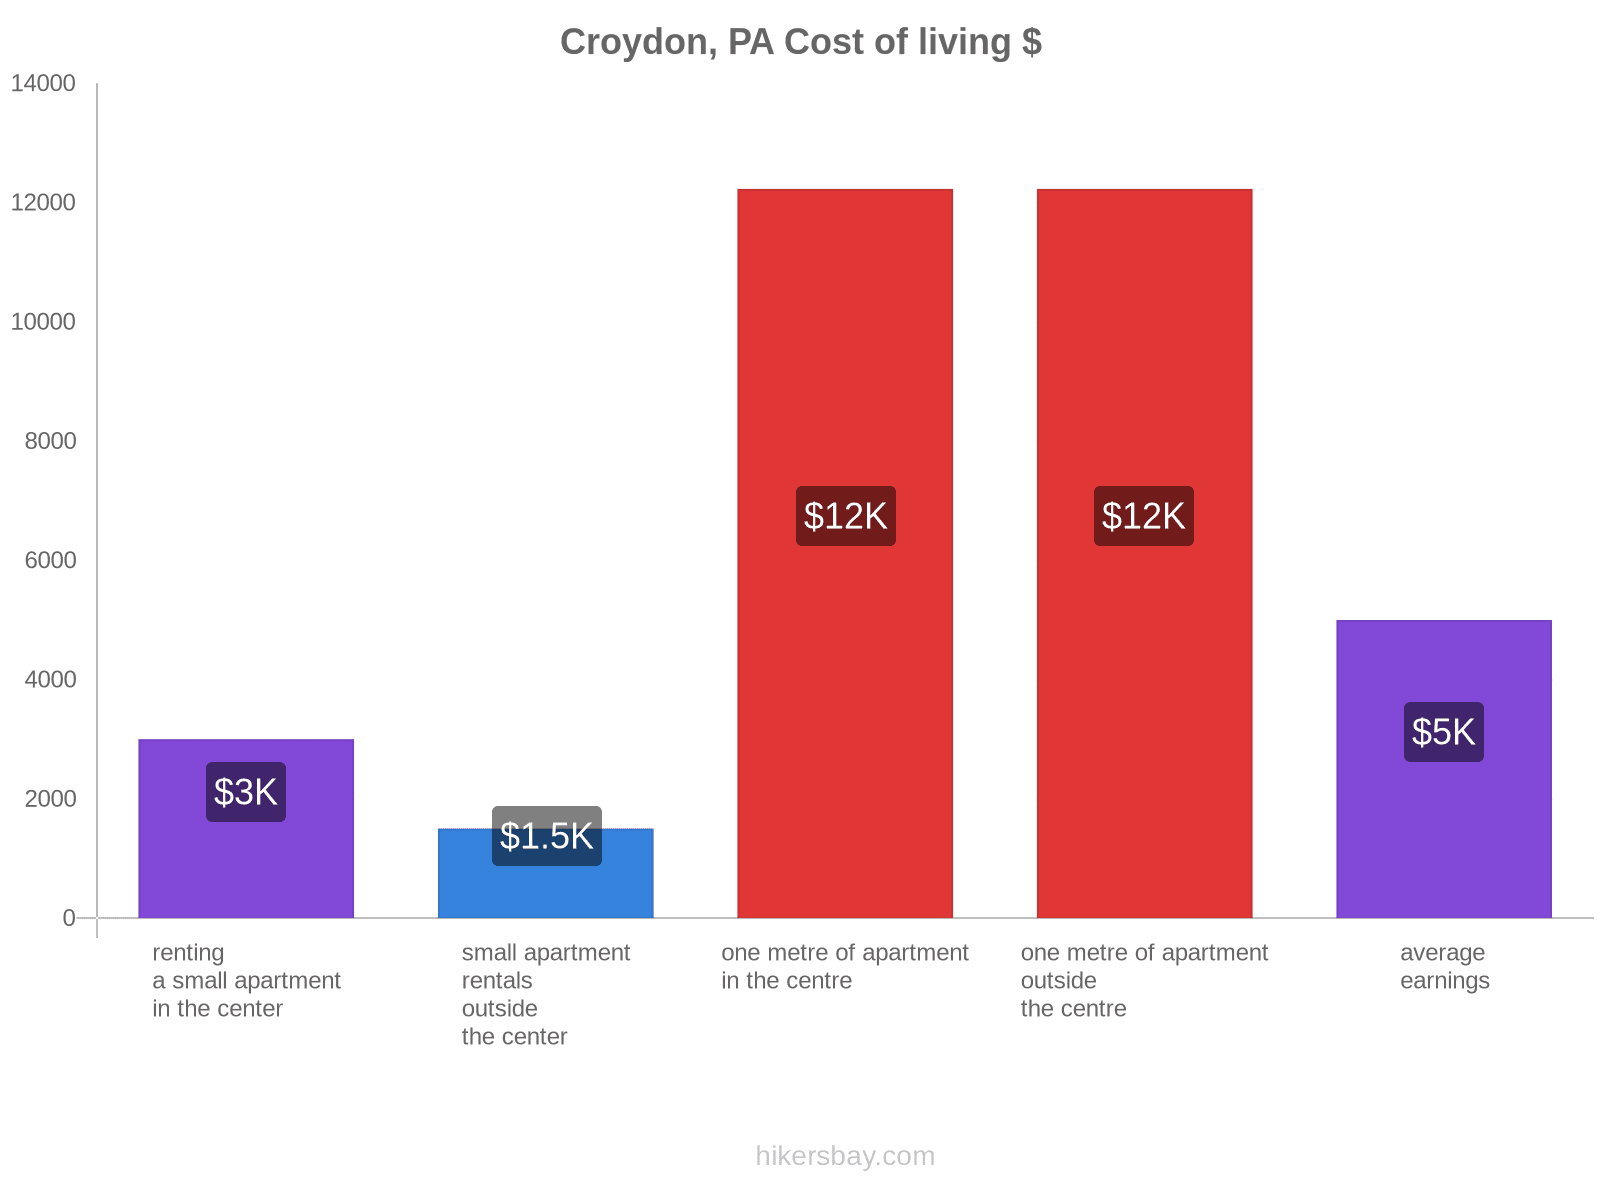 Croydon, PA cost of living hikersbay.com